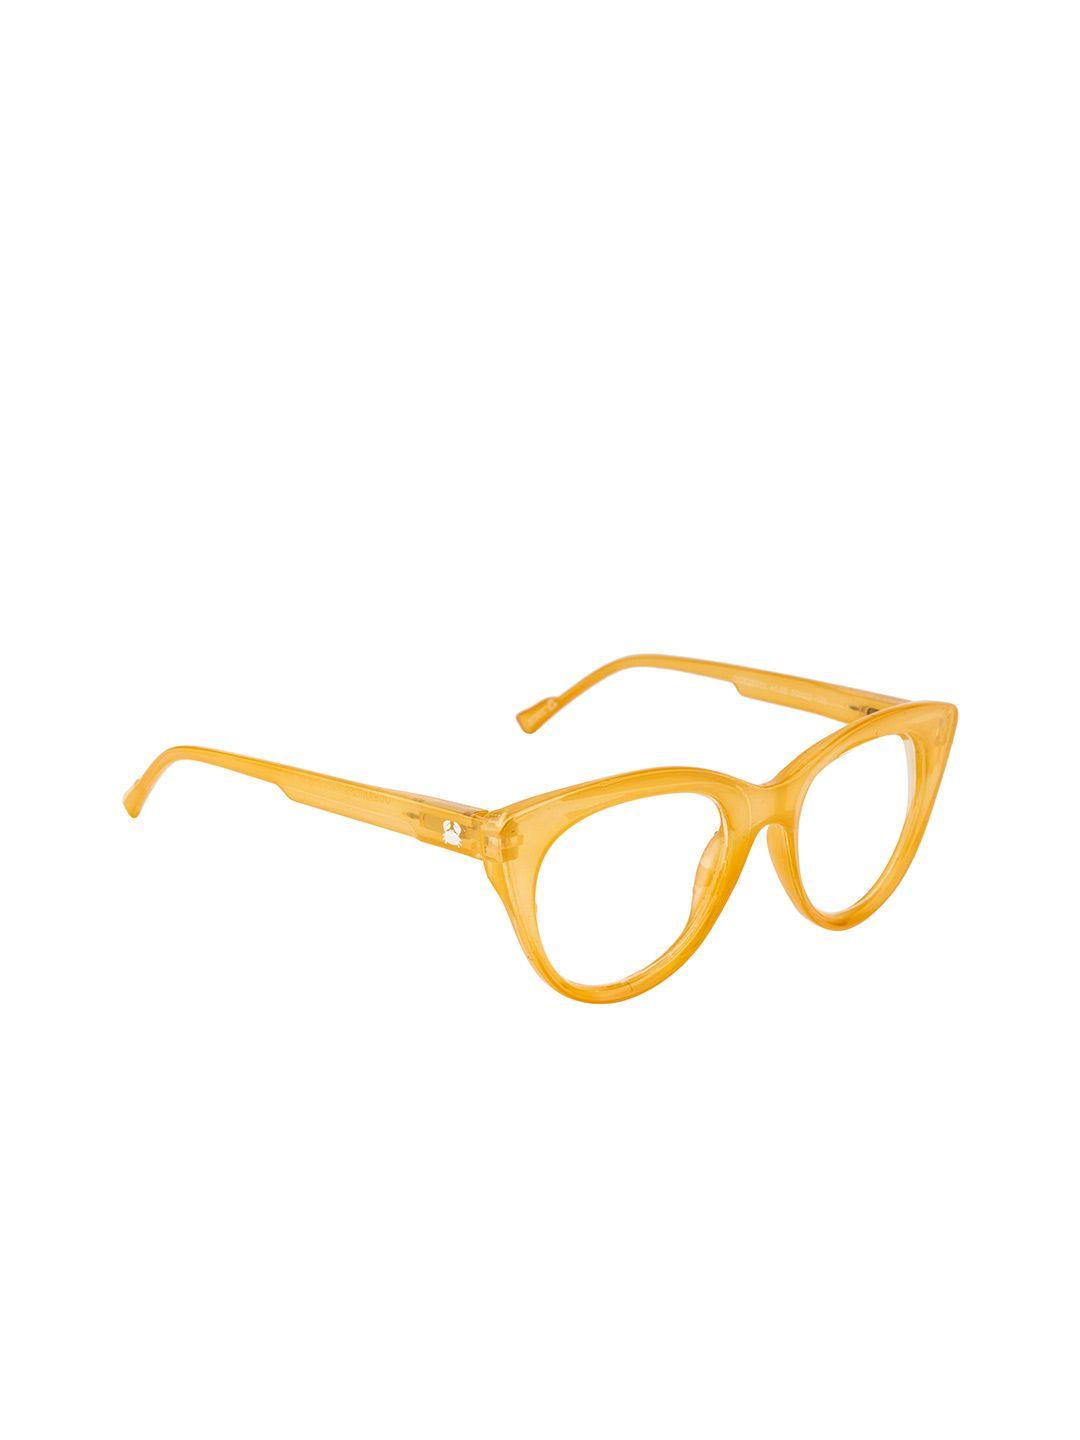 oceanides unisex clear lens & orange cateye sunglasses